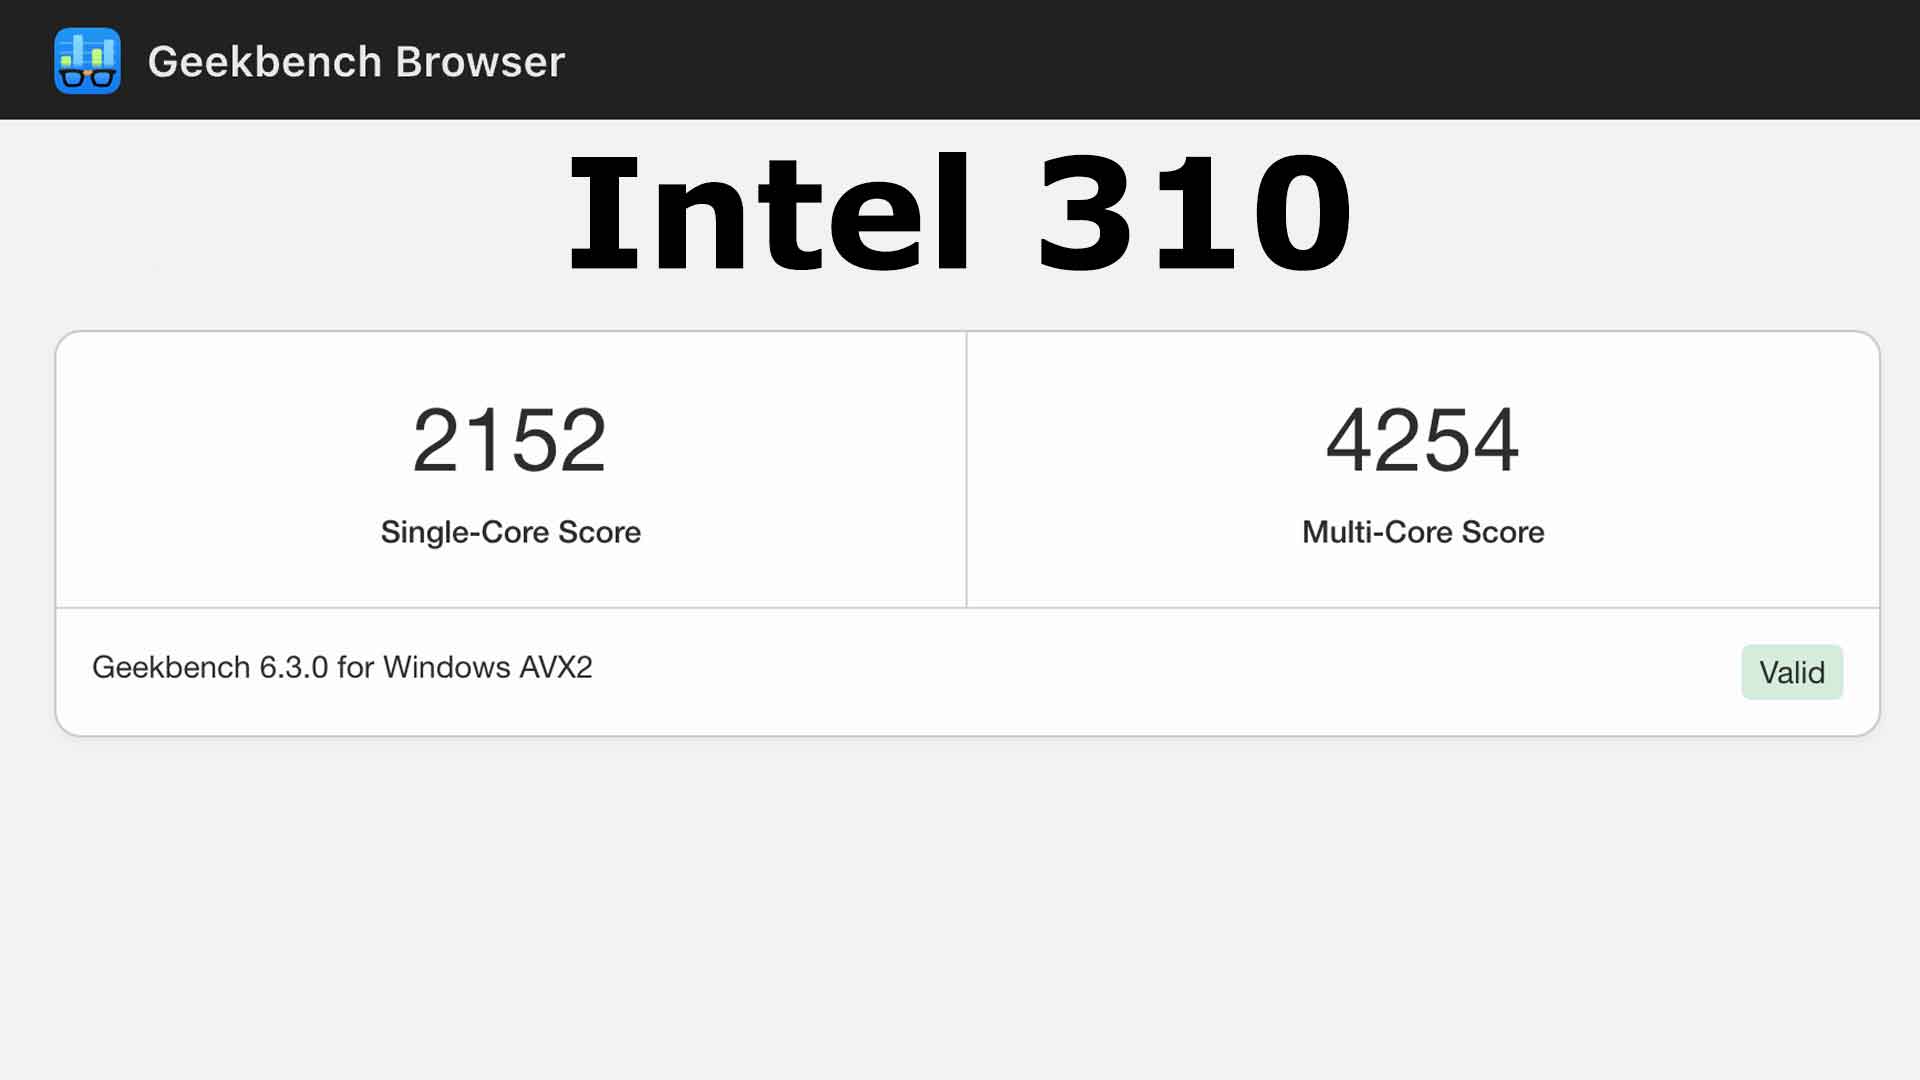 Intel 310 - Performances sous Geekbench 6